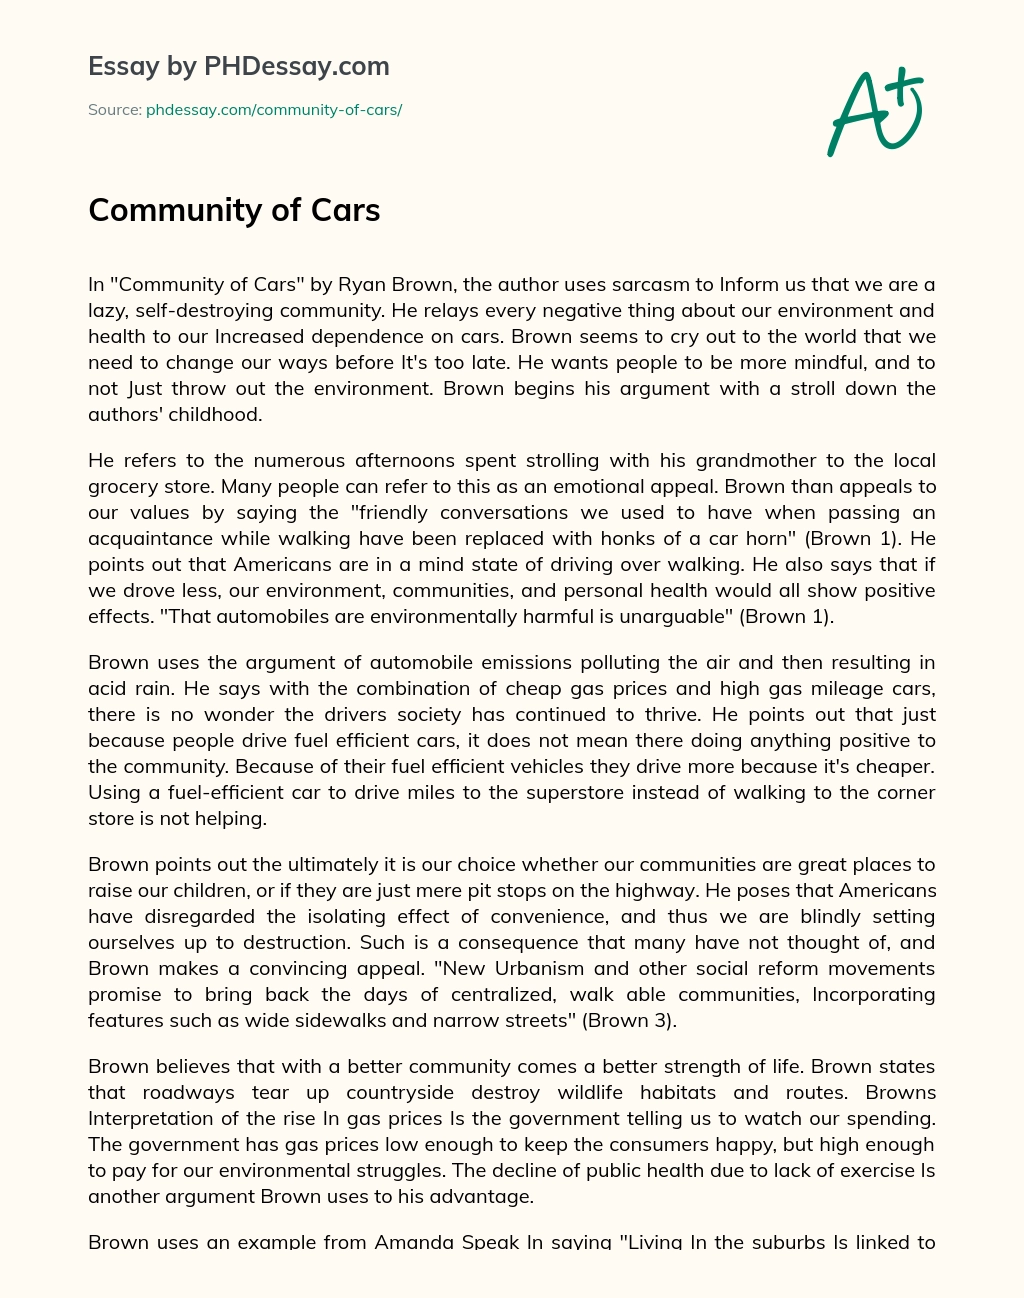 Community of Cars essay